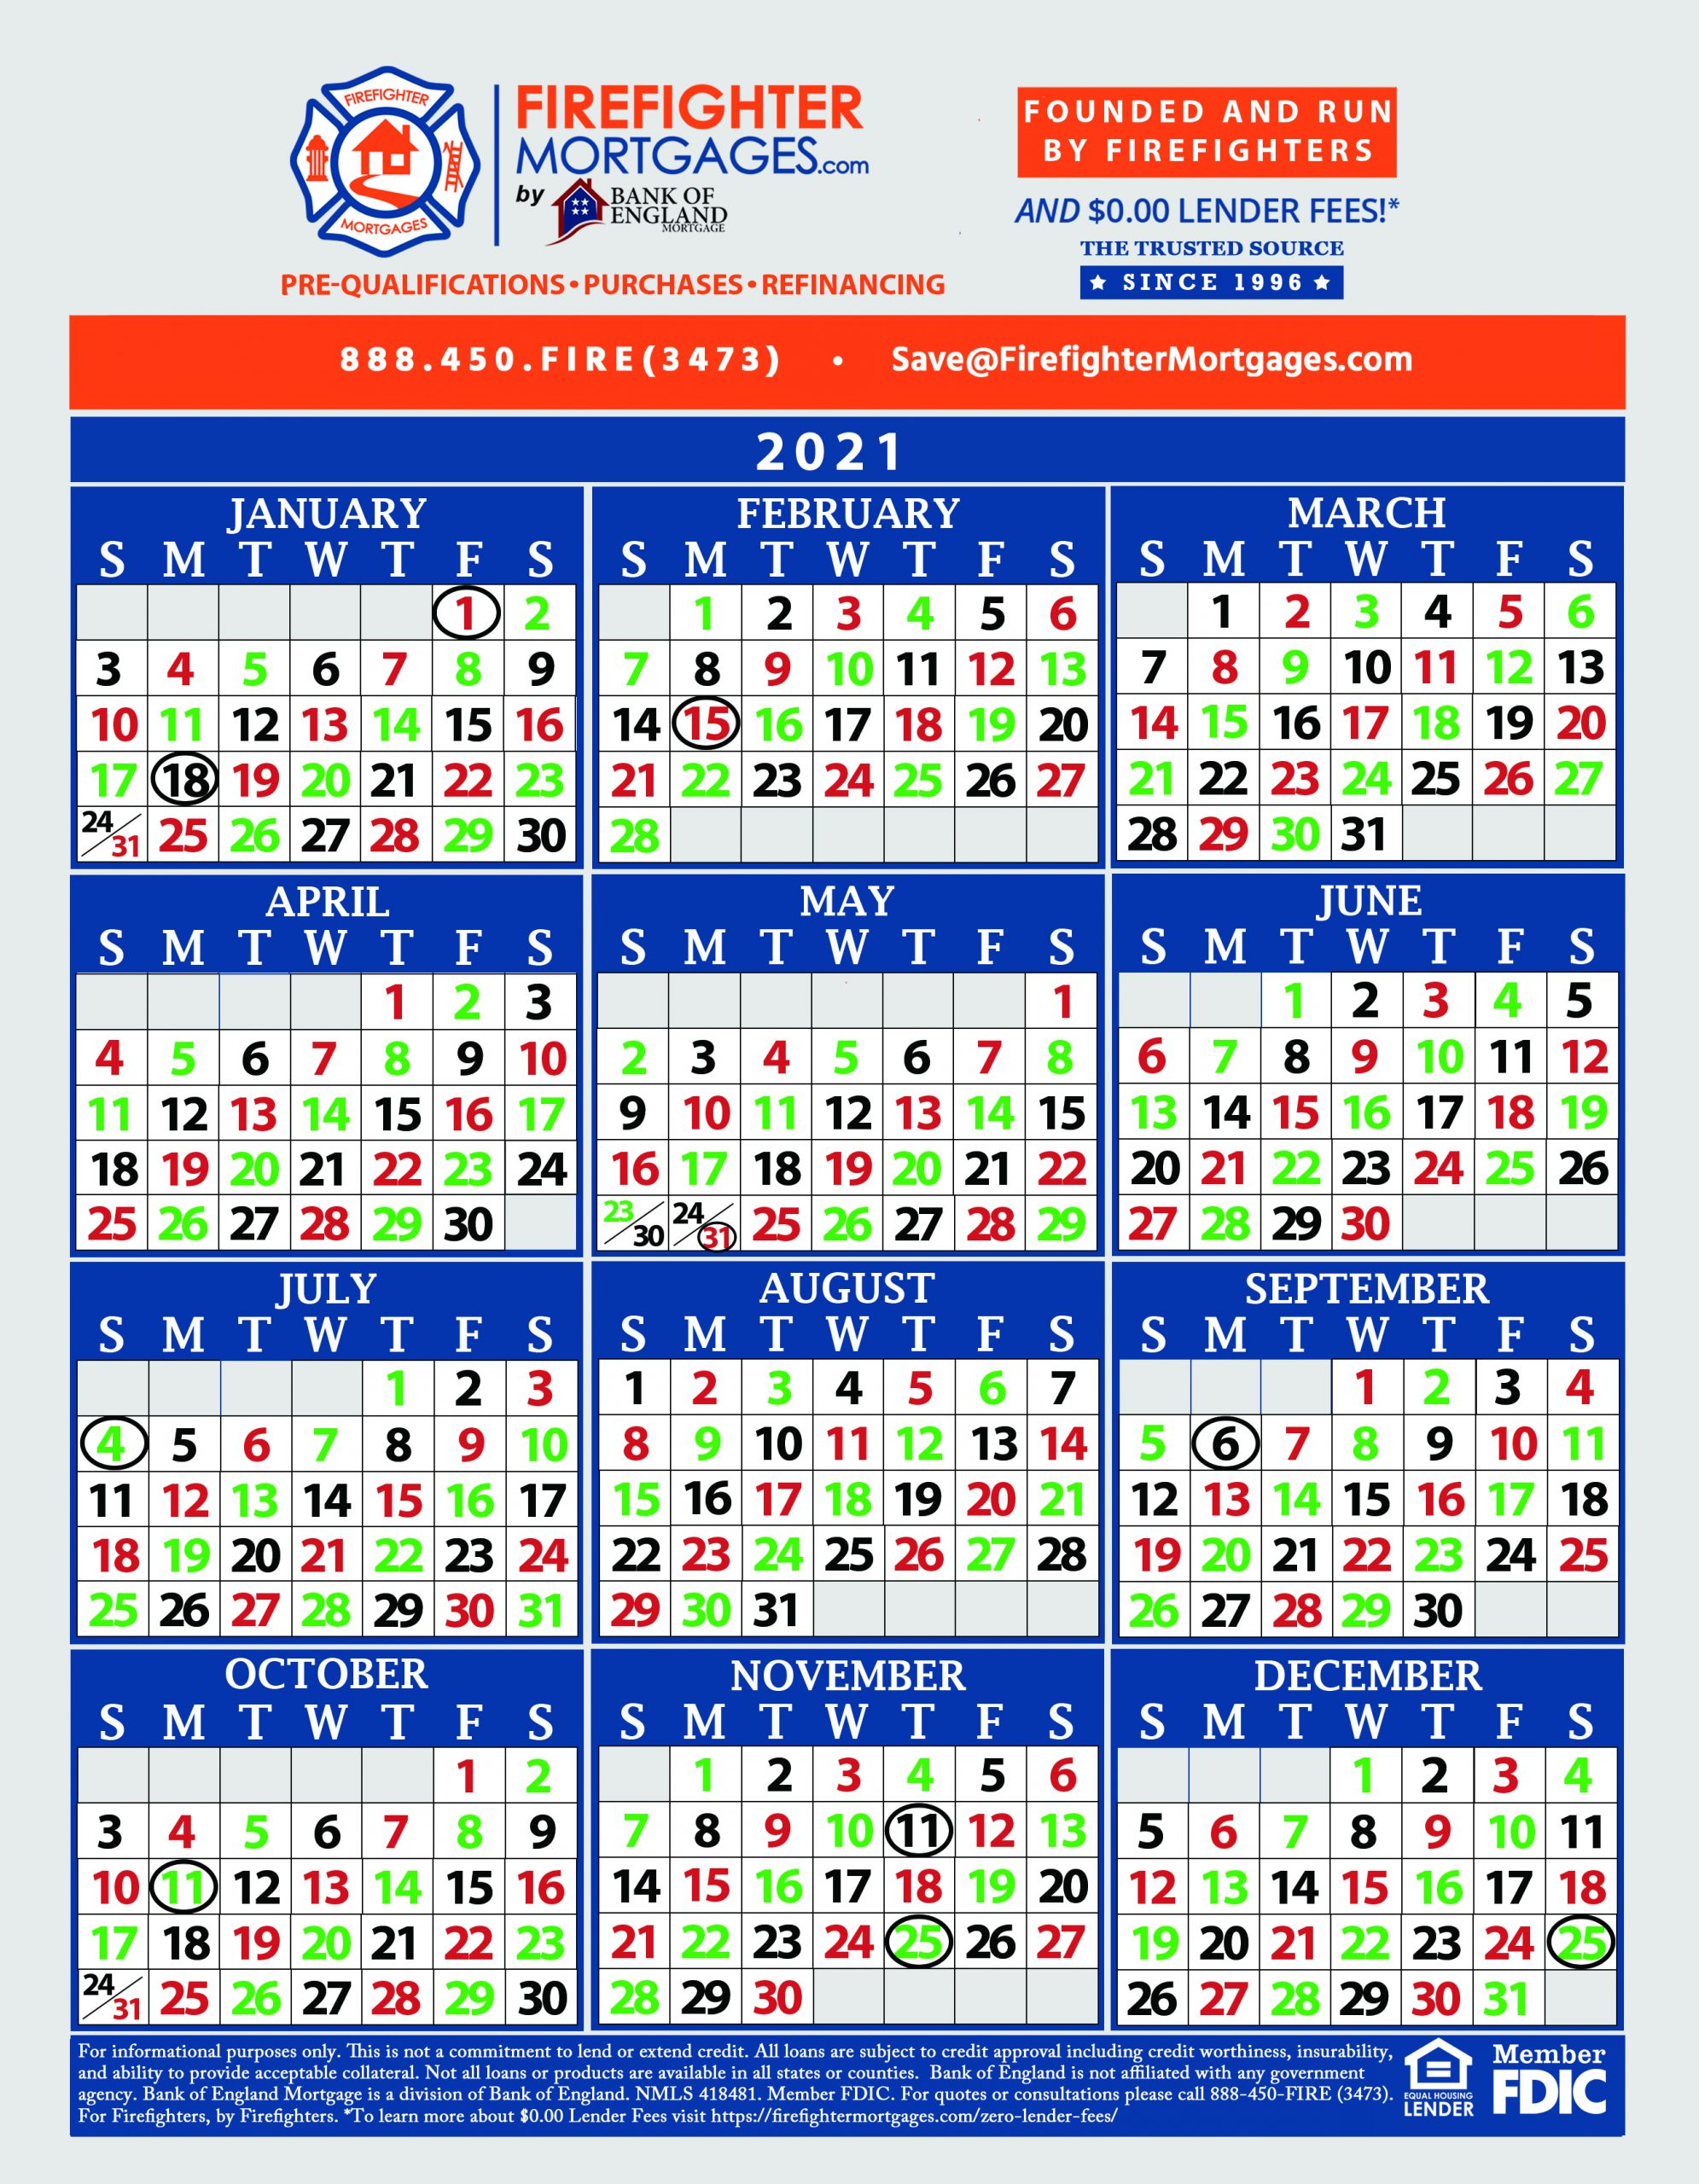 Firefighter Shift Calendars - Firefighter Mortgages®